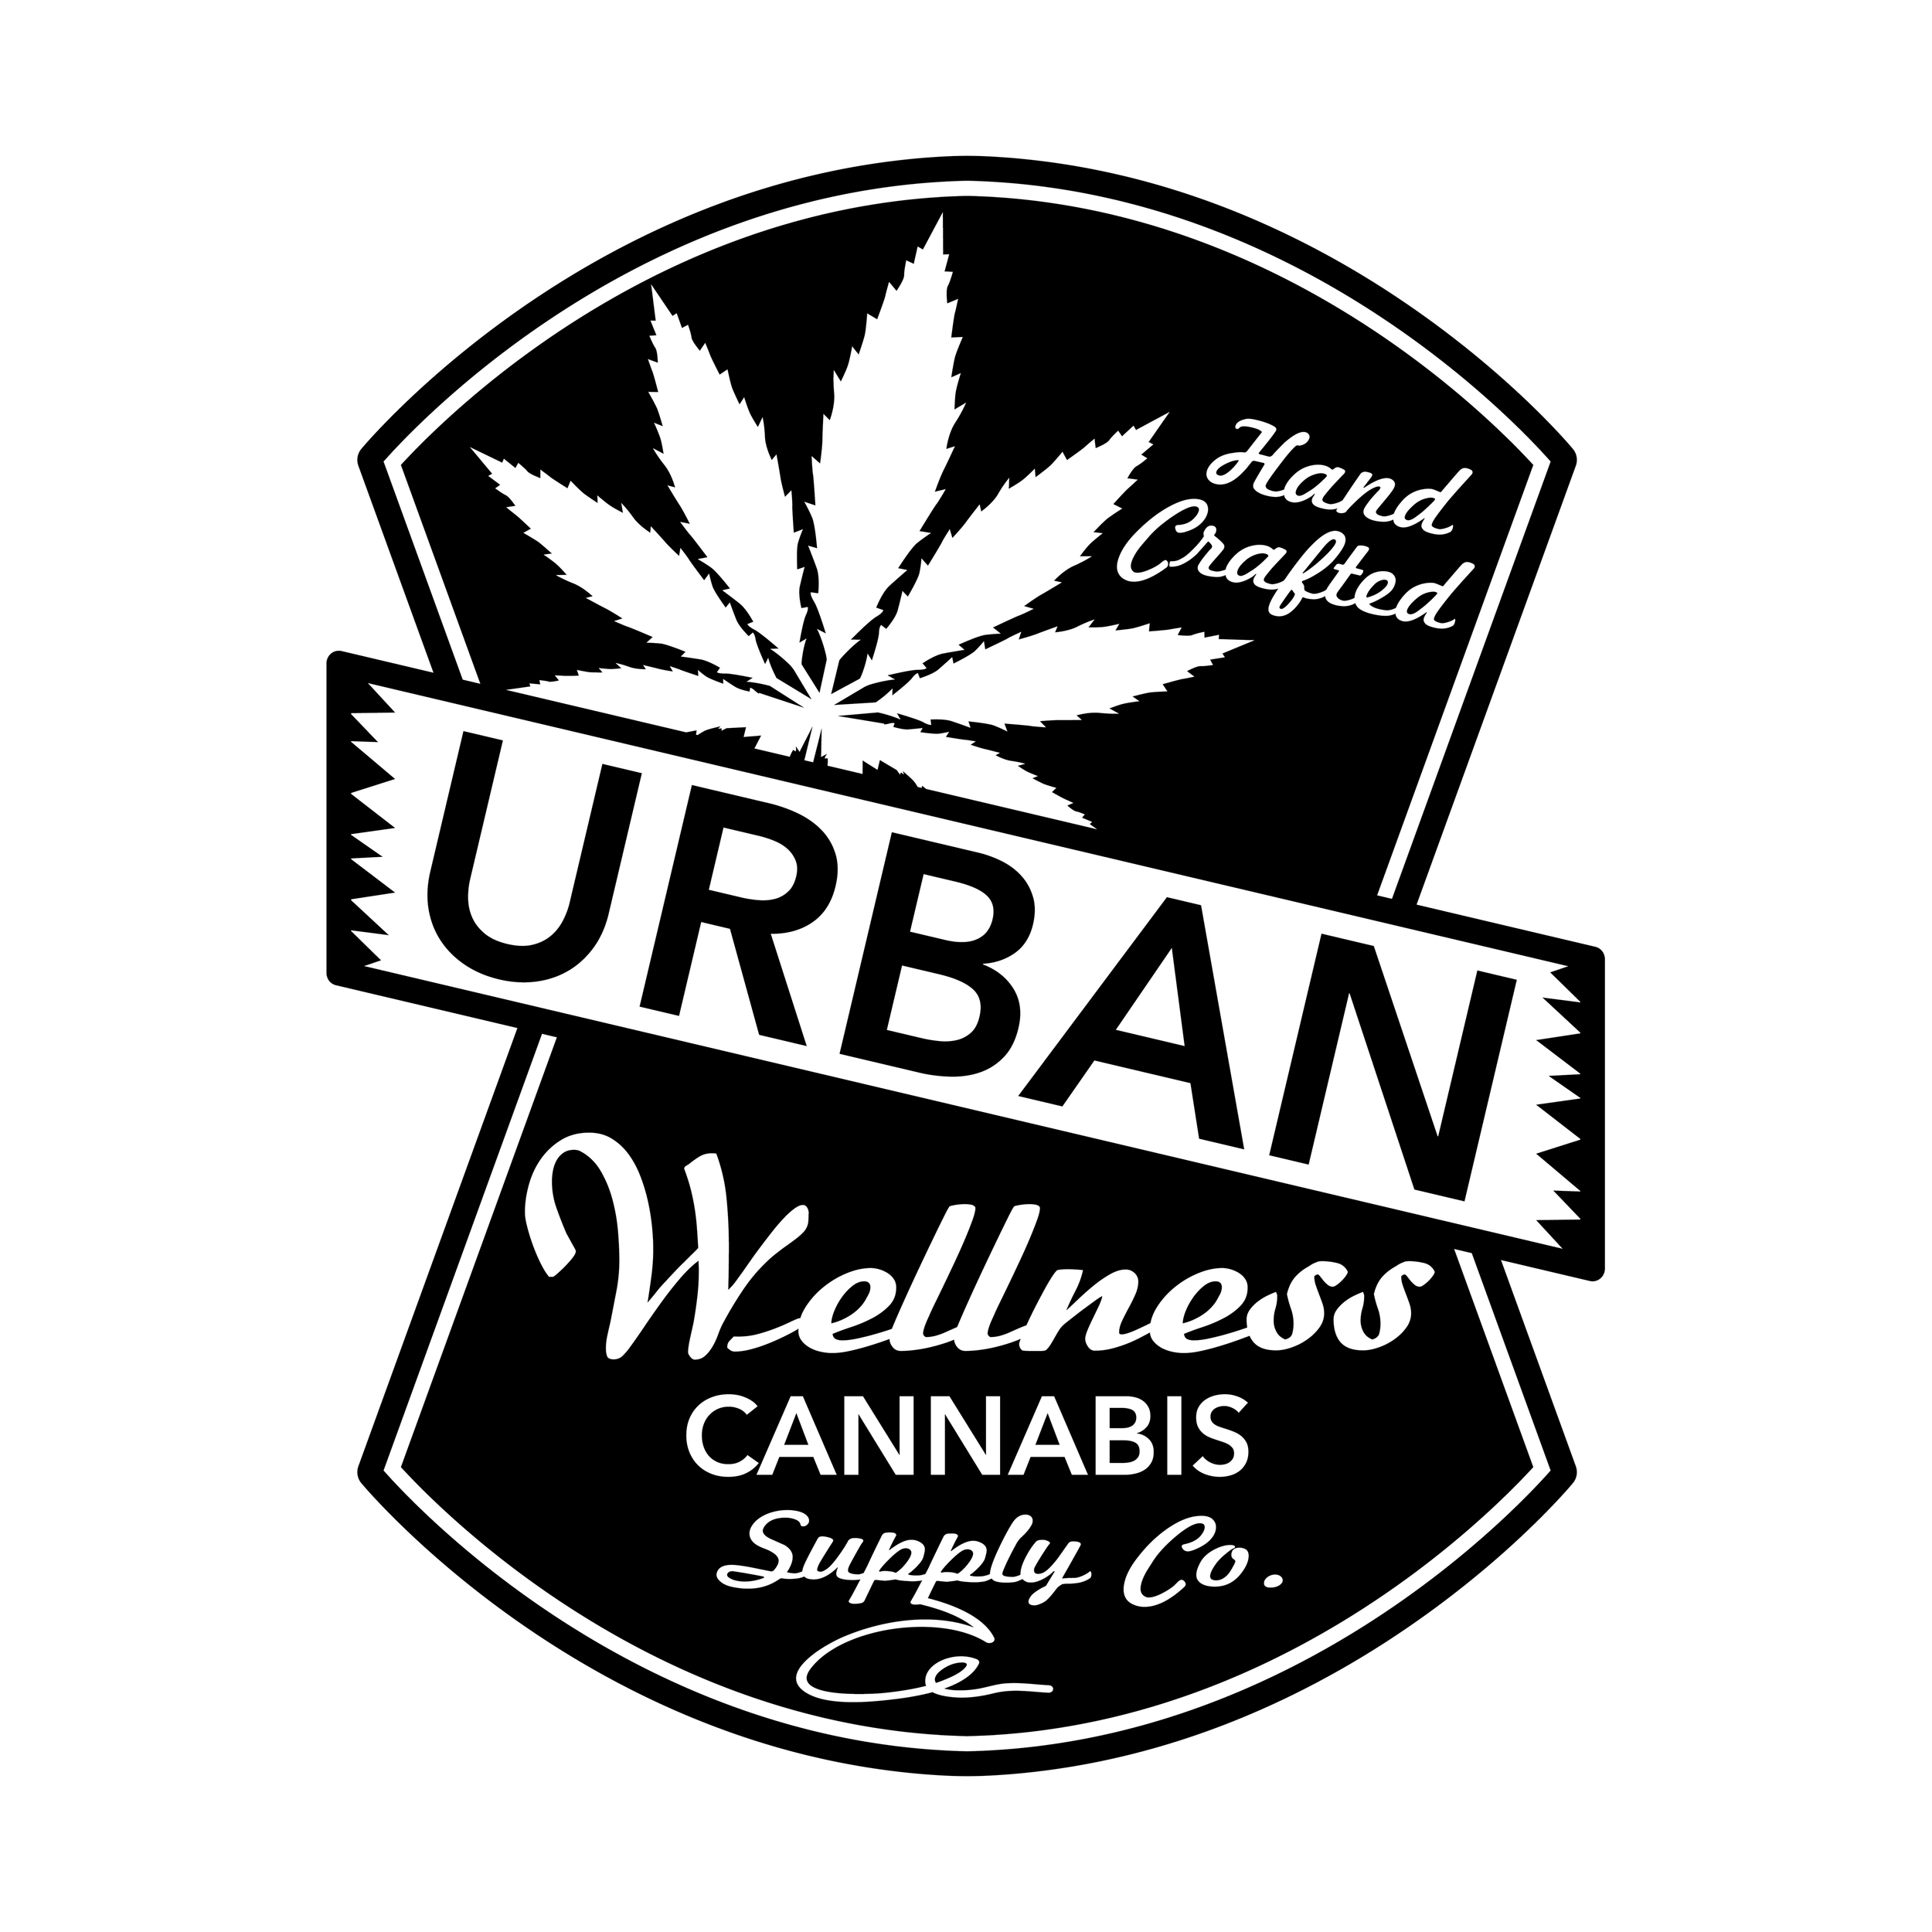 Urban Wellness Cannabis Dispensary - Las Cruces logo